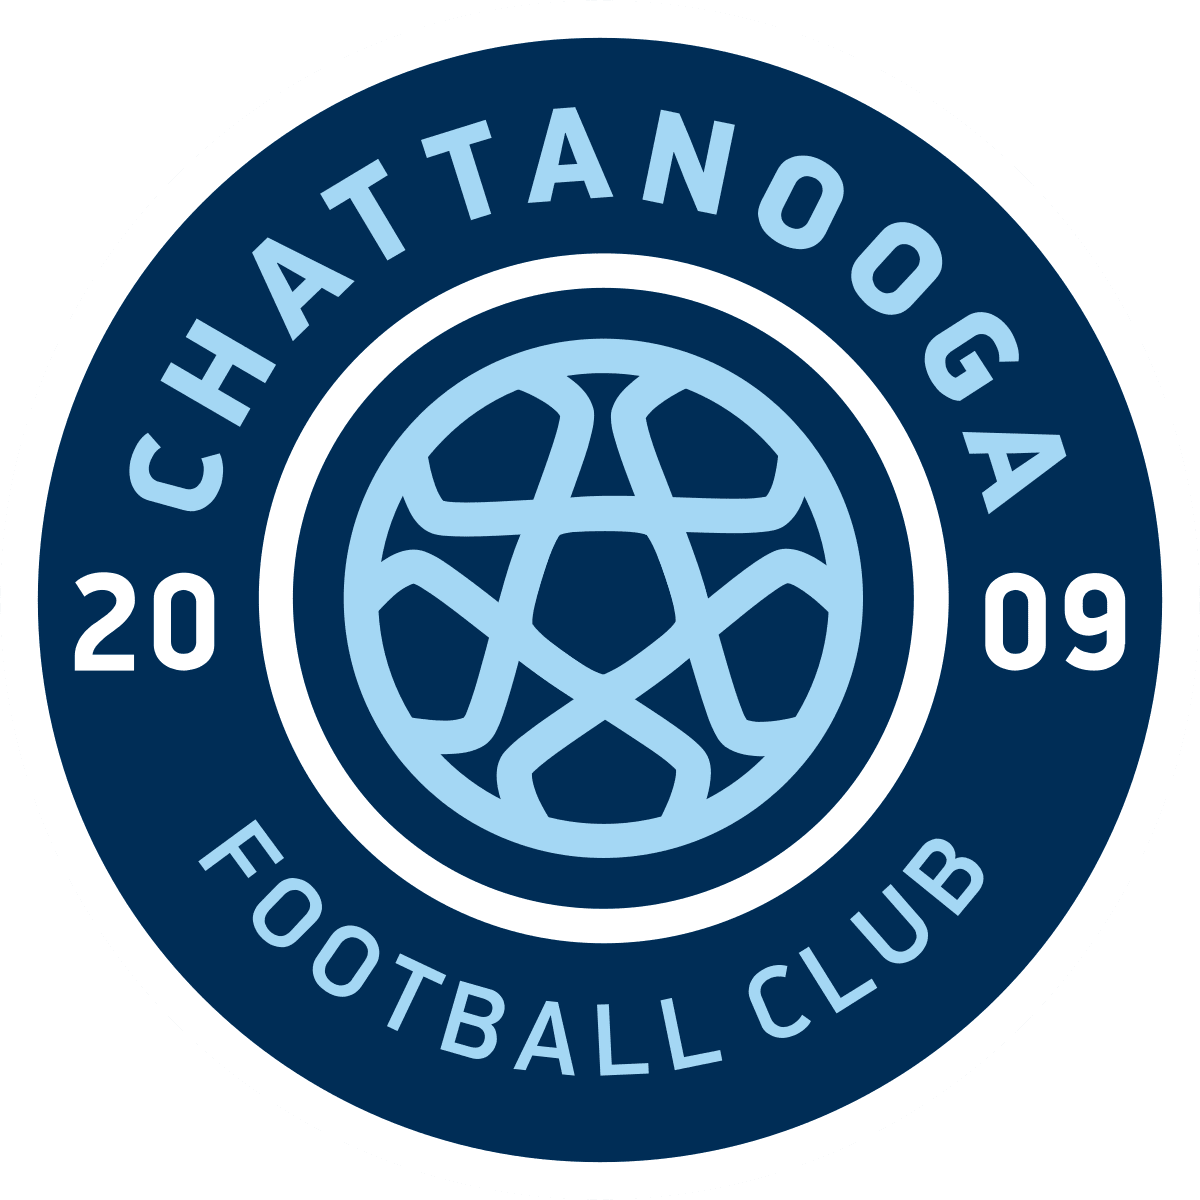 Chattanooga Football Club | Organizational Profile, Work & Jobs